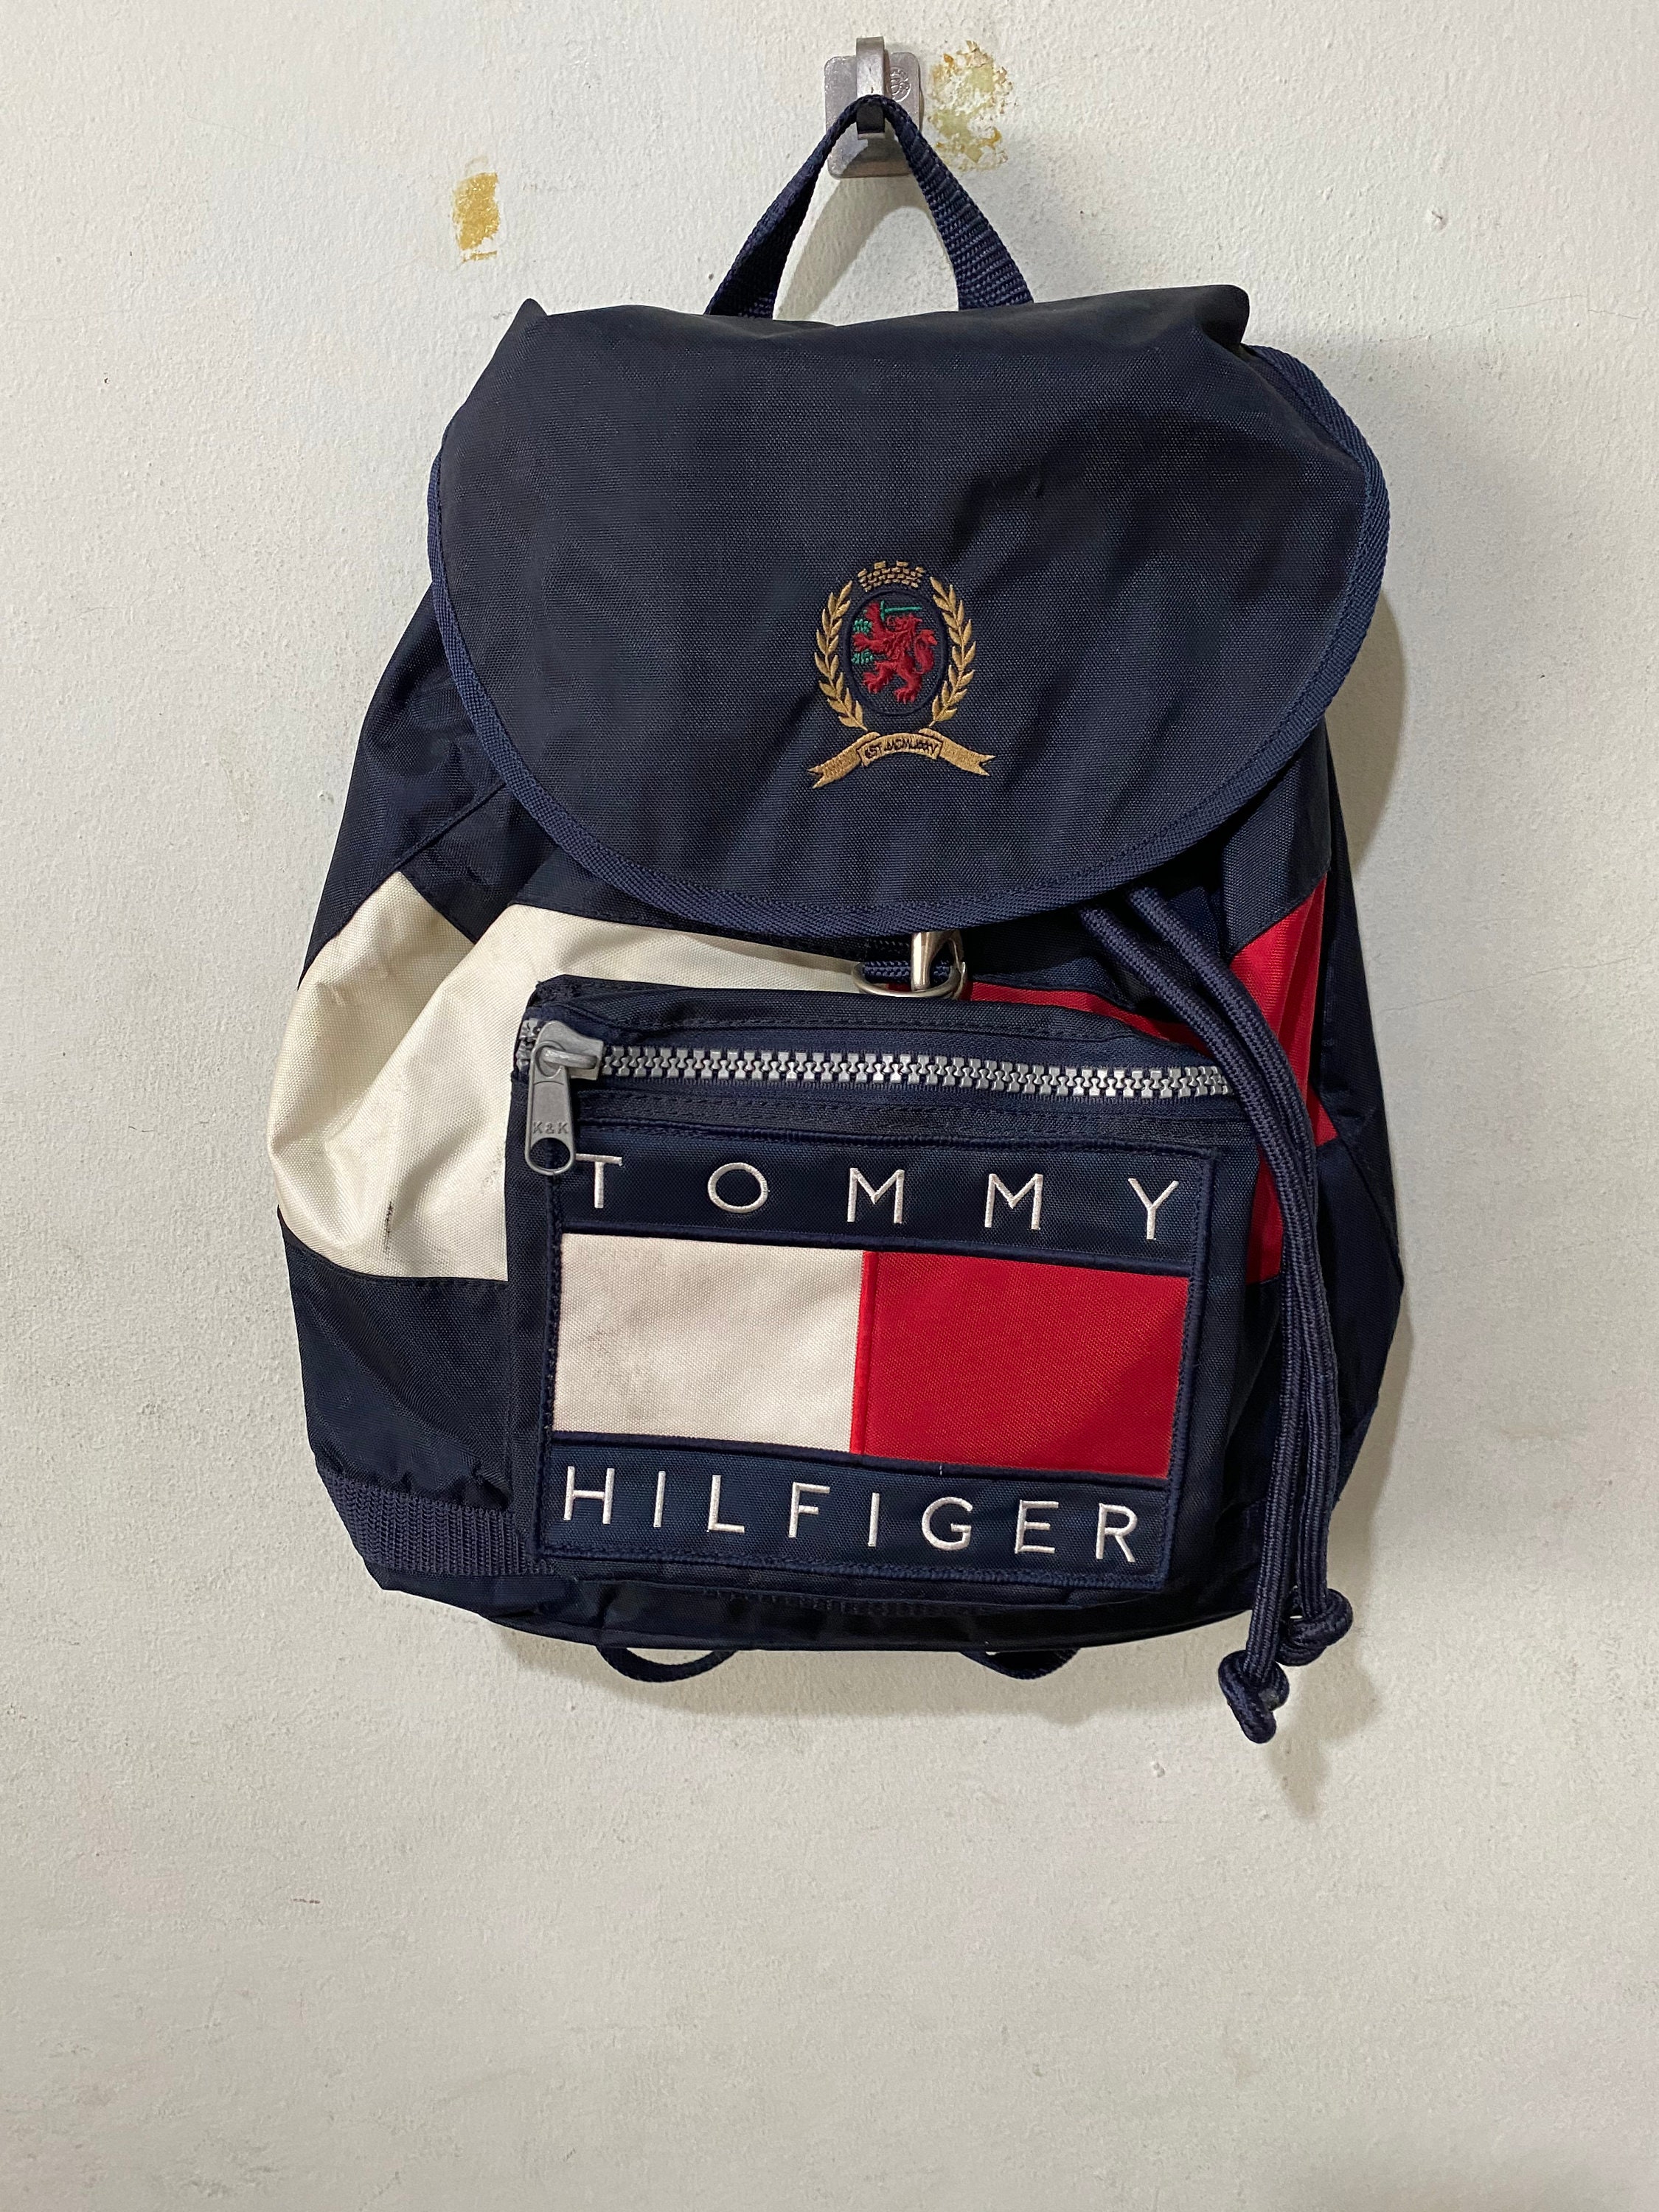 Vintage Tommy Hilfiger Backpack Free Shipping | Etsy